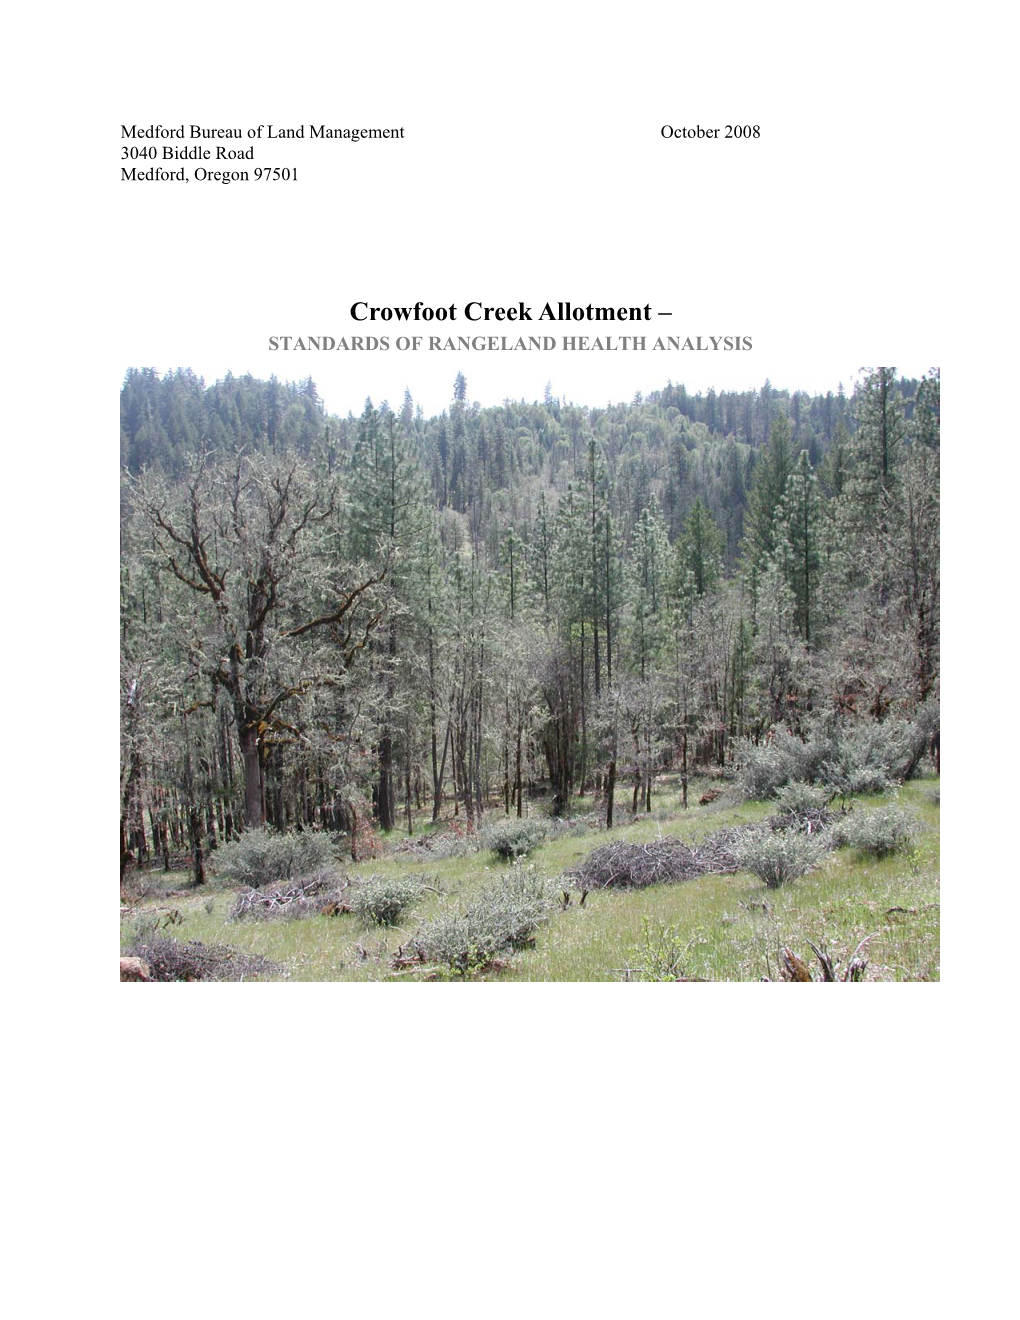 Crowfoot Creek RANGELAND HEALTH ANALYSIS